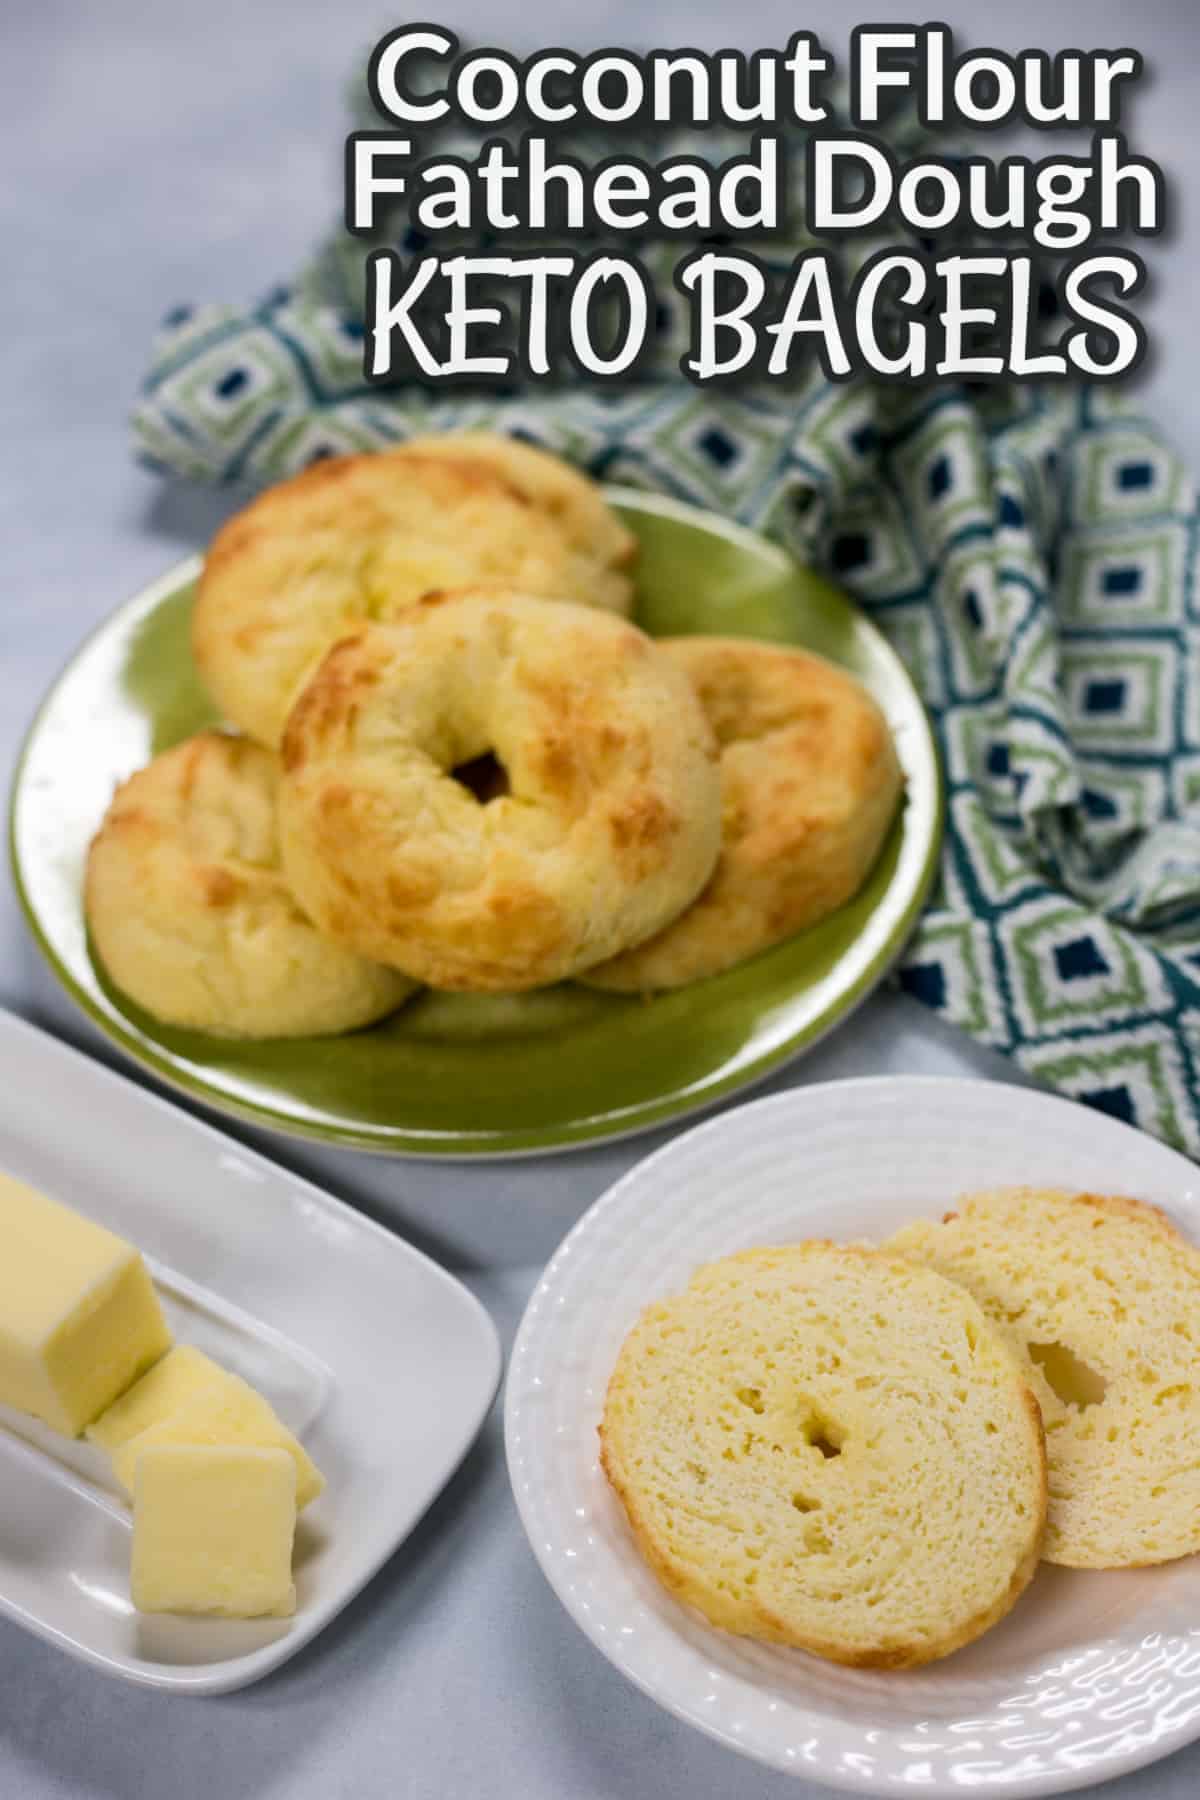 Keto Bagels With Coconut Flour Fathead Dough Low Carb Yum